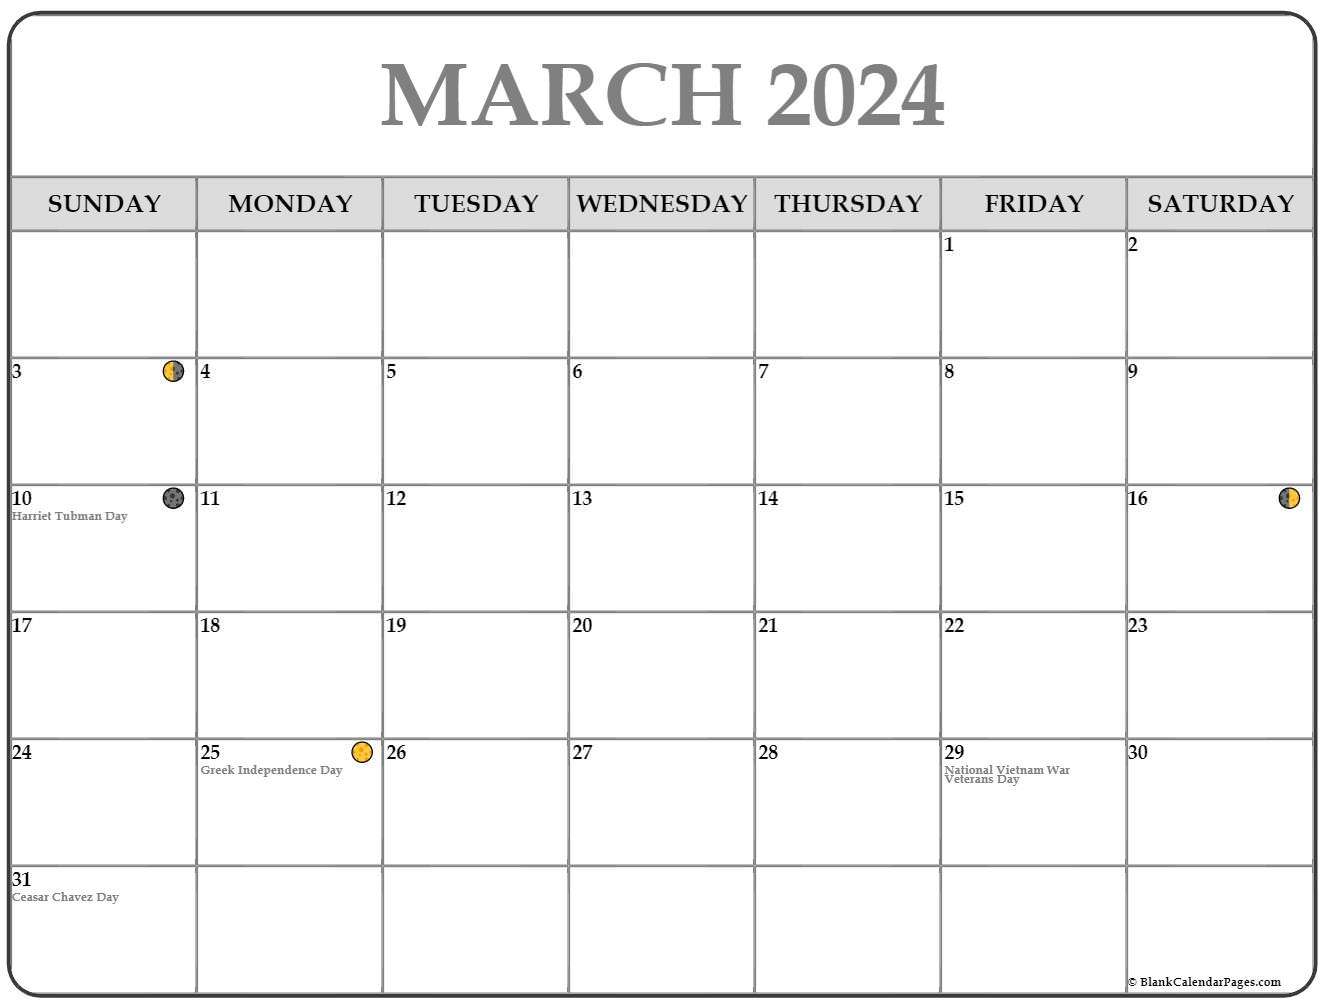 March 2024 Lunar Calendar Printable Allis Bendite - Free Printable 2024 Calendar With Moon Phases